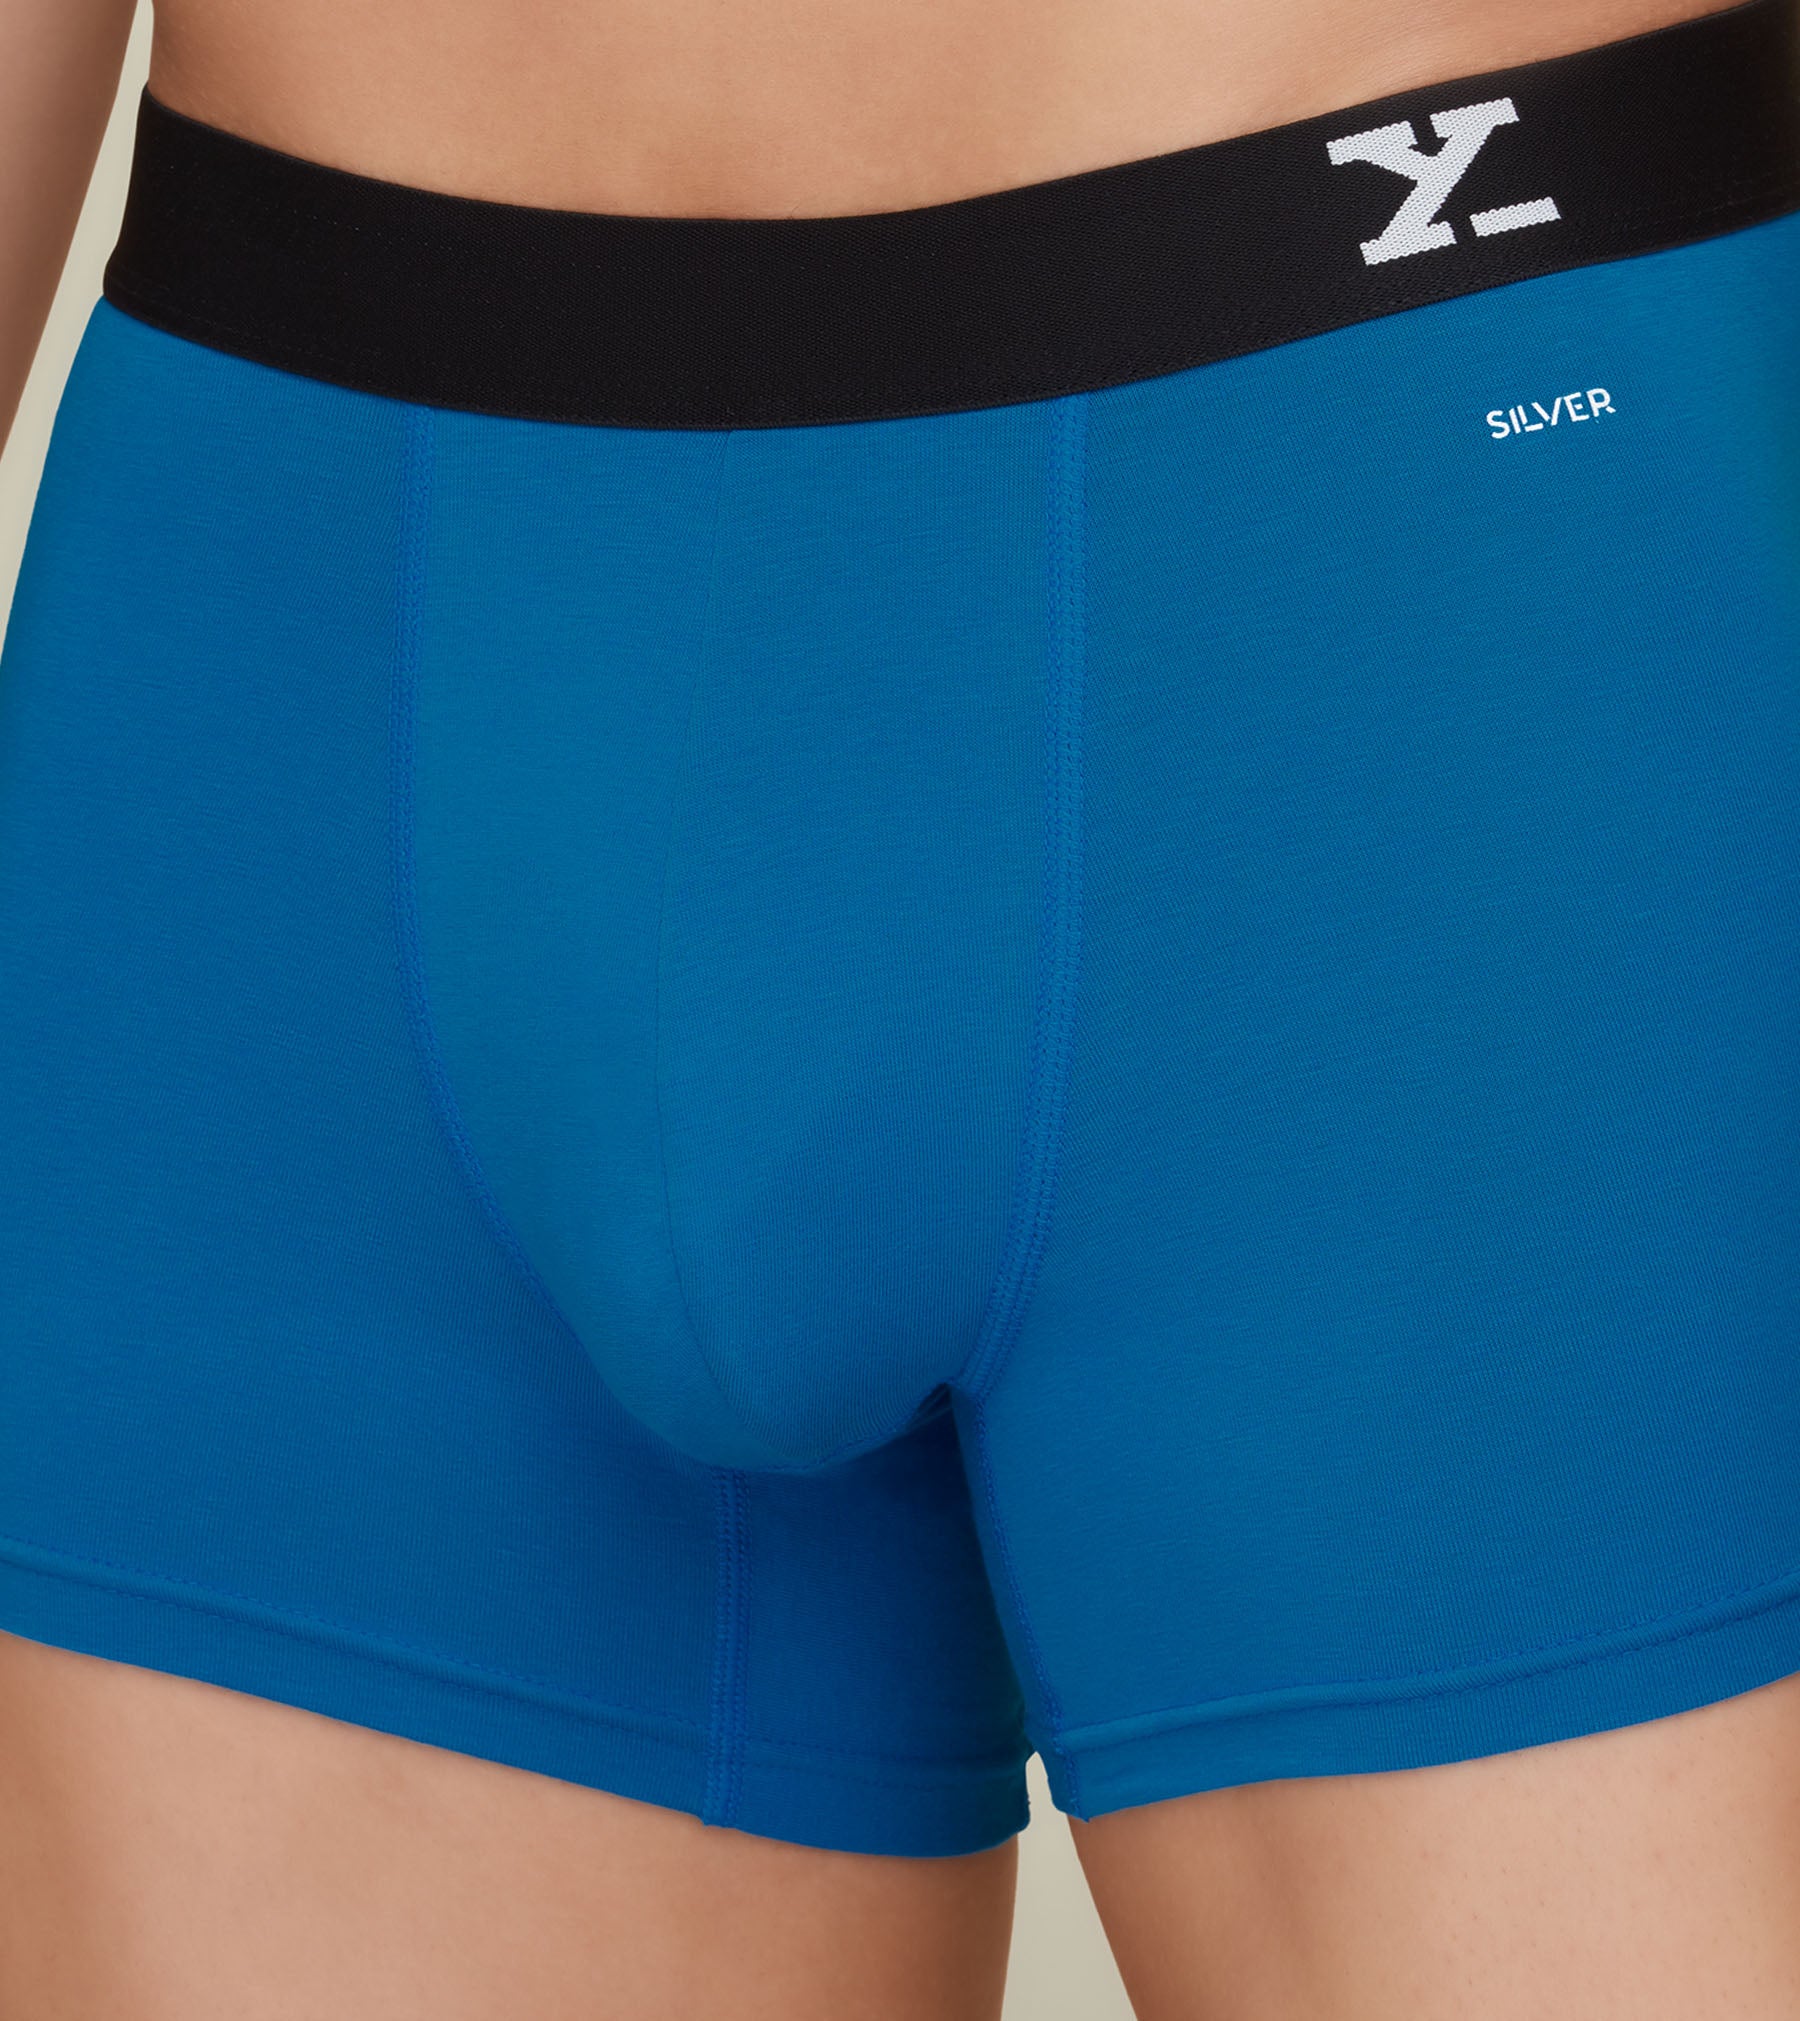 Aero Silver Cotton Trunks For Men Pack of 2(Light Blue, Dark Blue) -  XYXX Mens Apparels